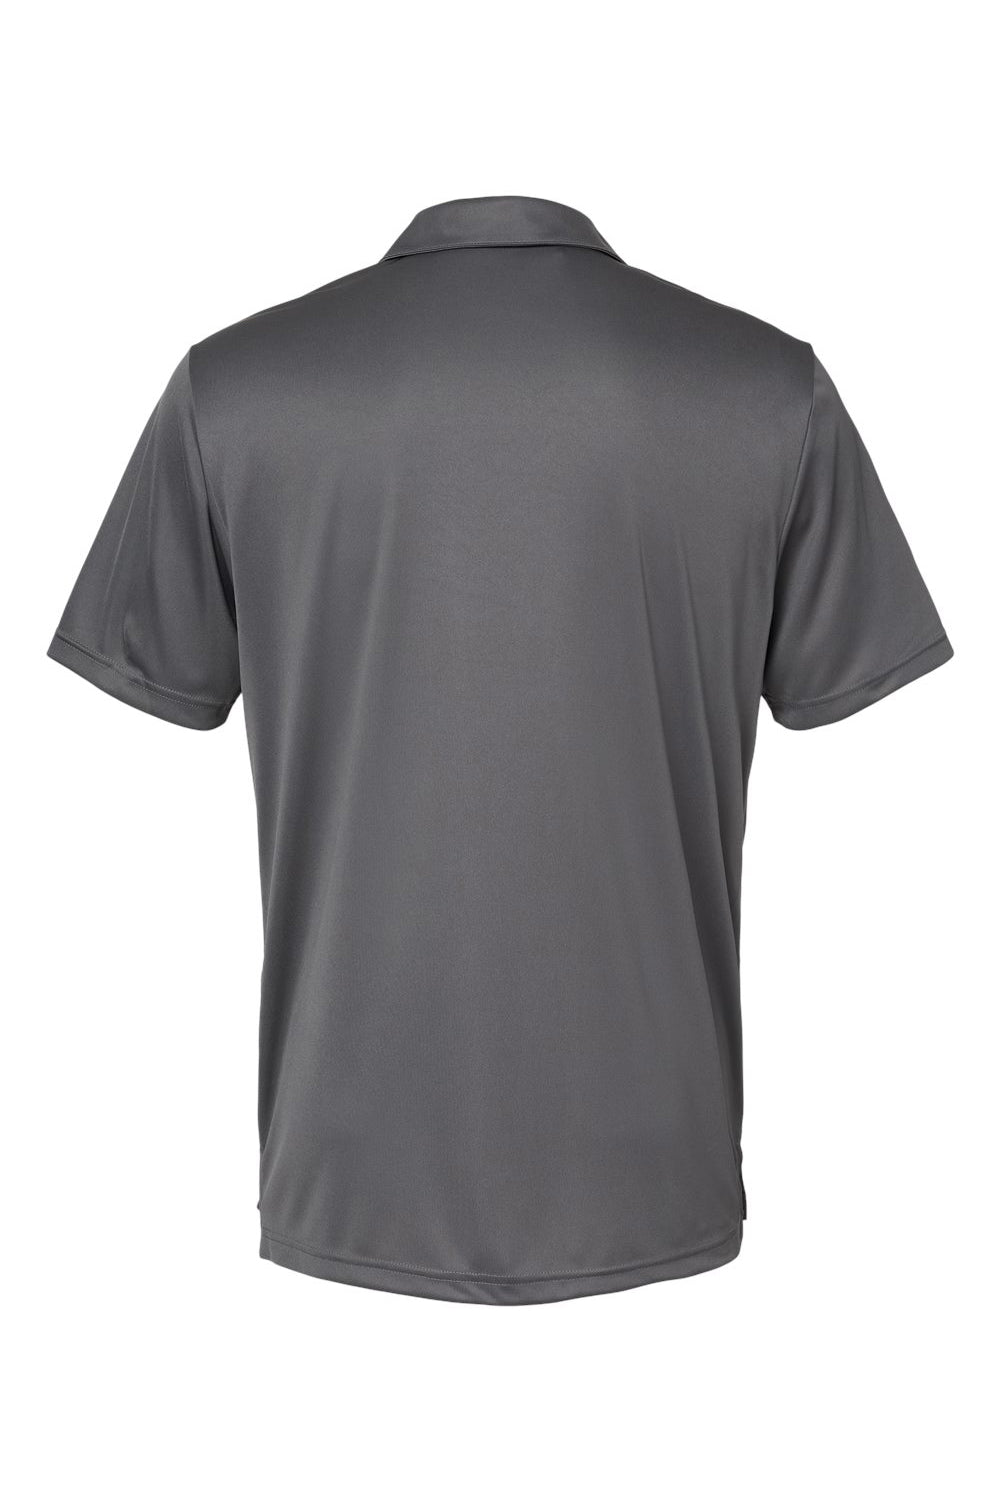 Adidas A324 Mens 3 Stripes Short Sleeve Polo Shirt Grey/Black Flat Back